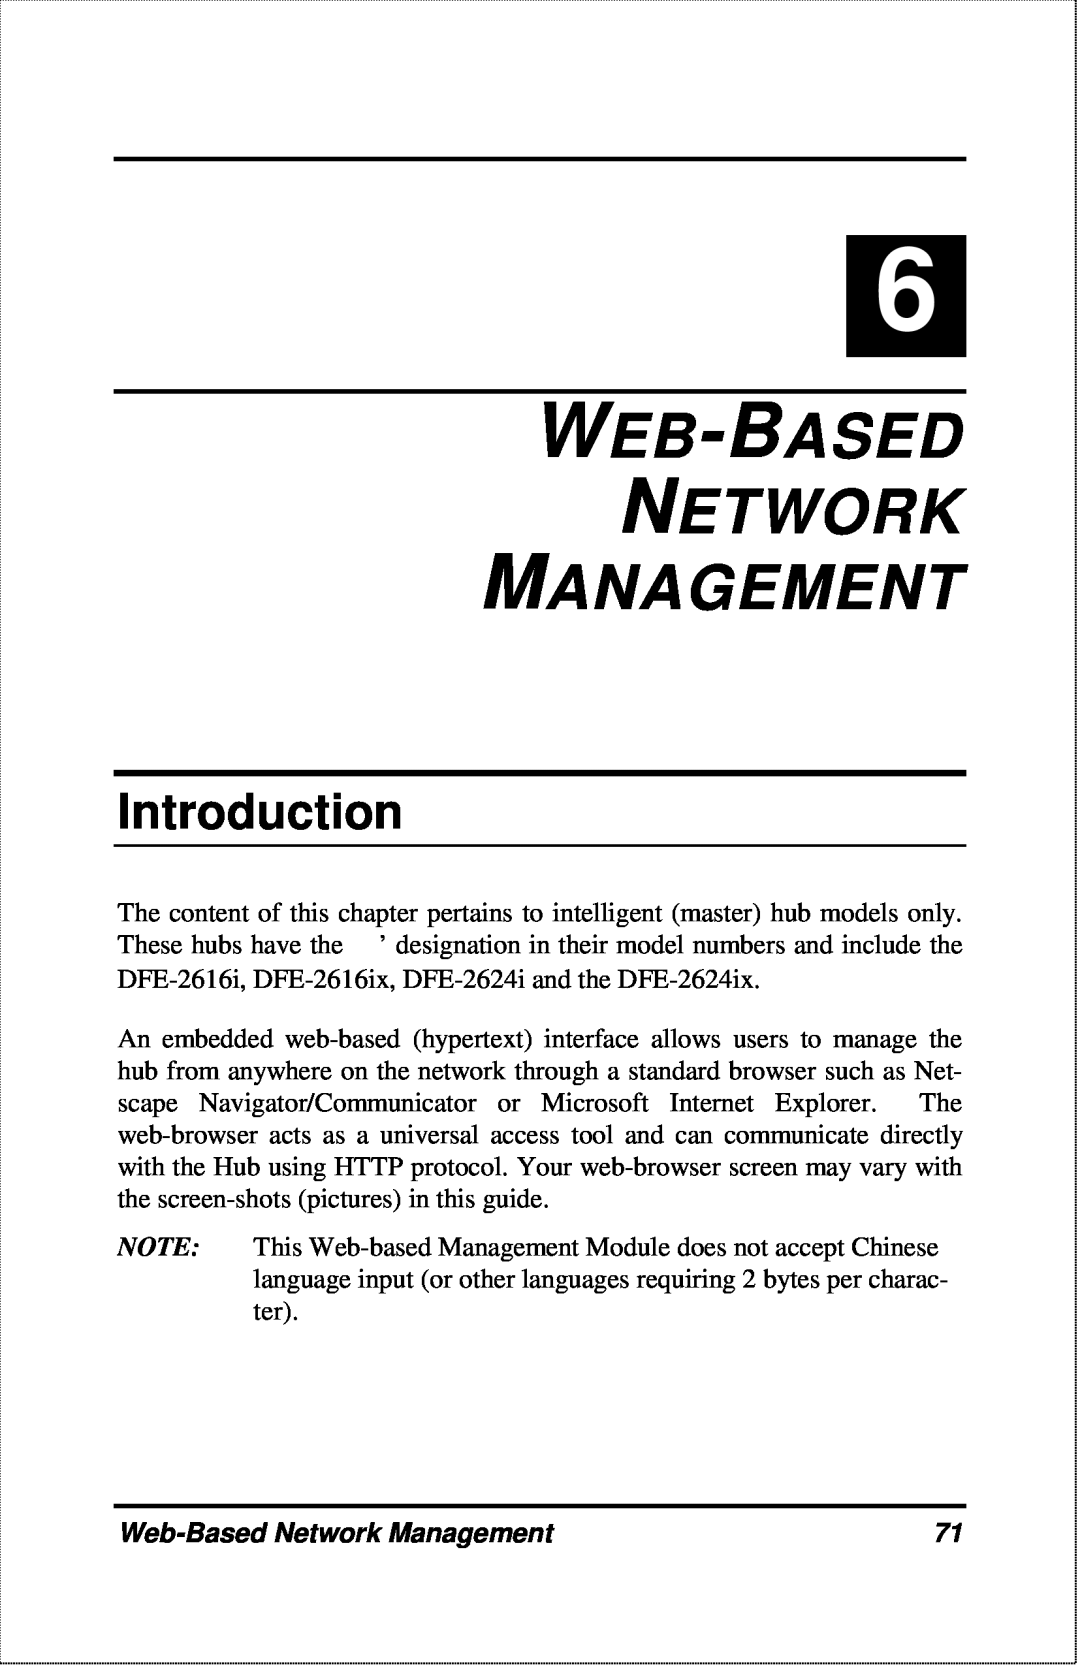 D-Link DFE-2600 manual Web-Based Network Management, Introduction 